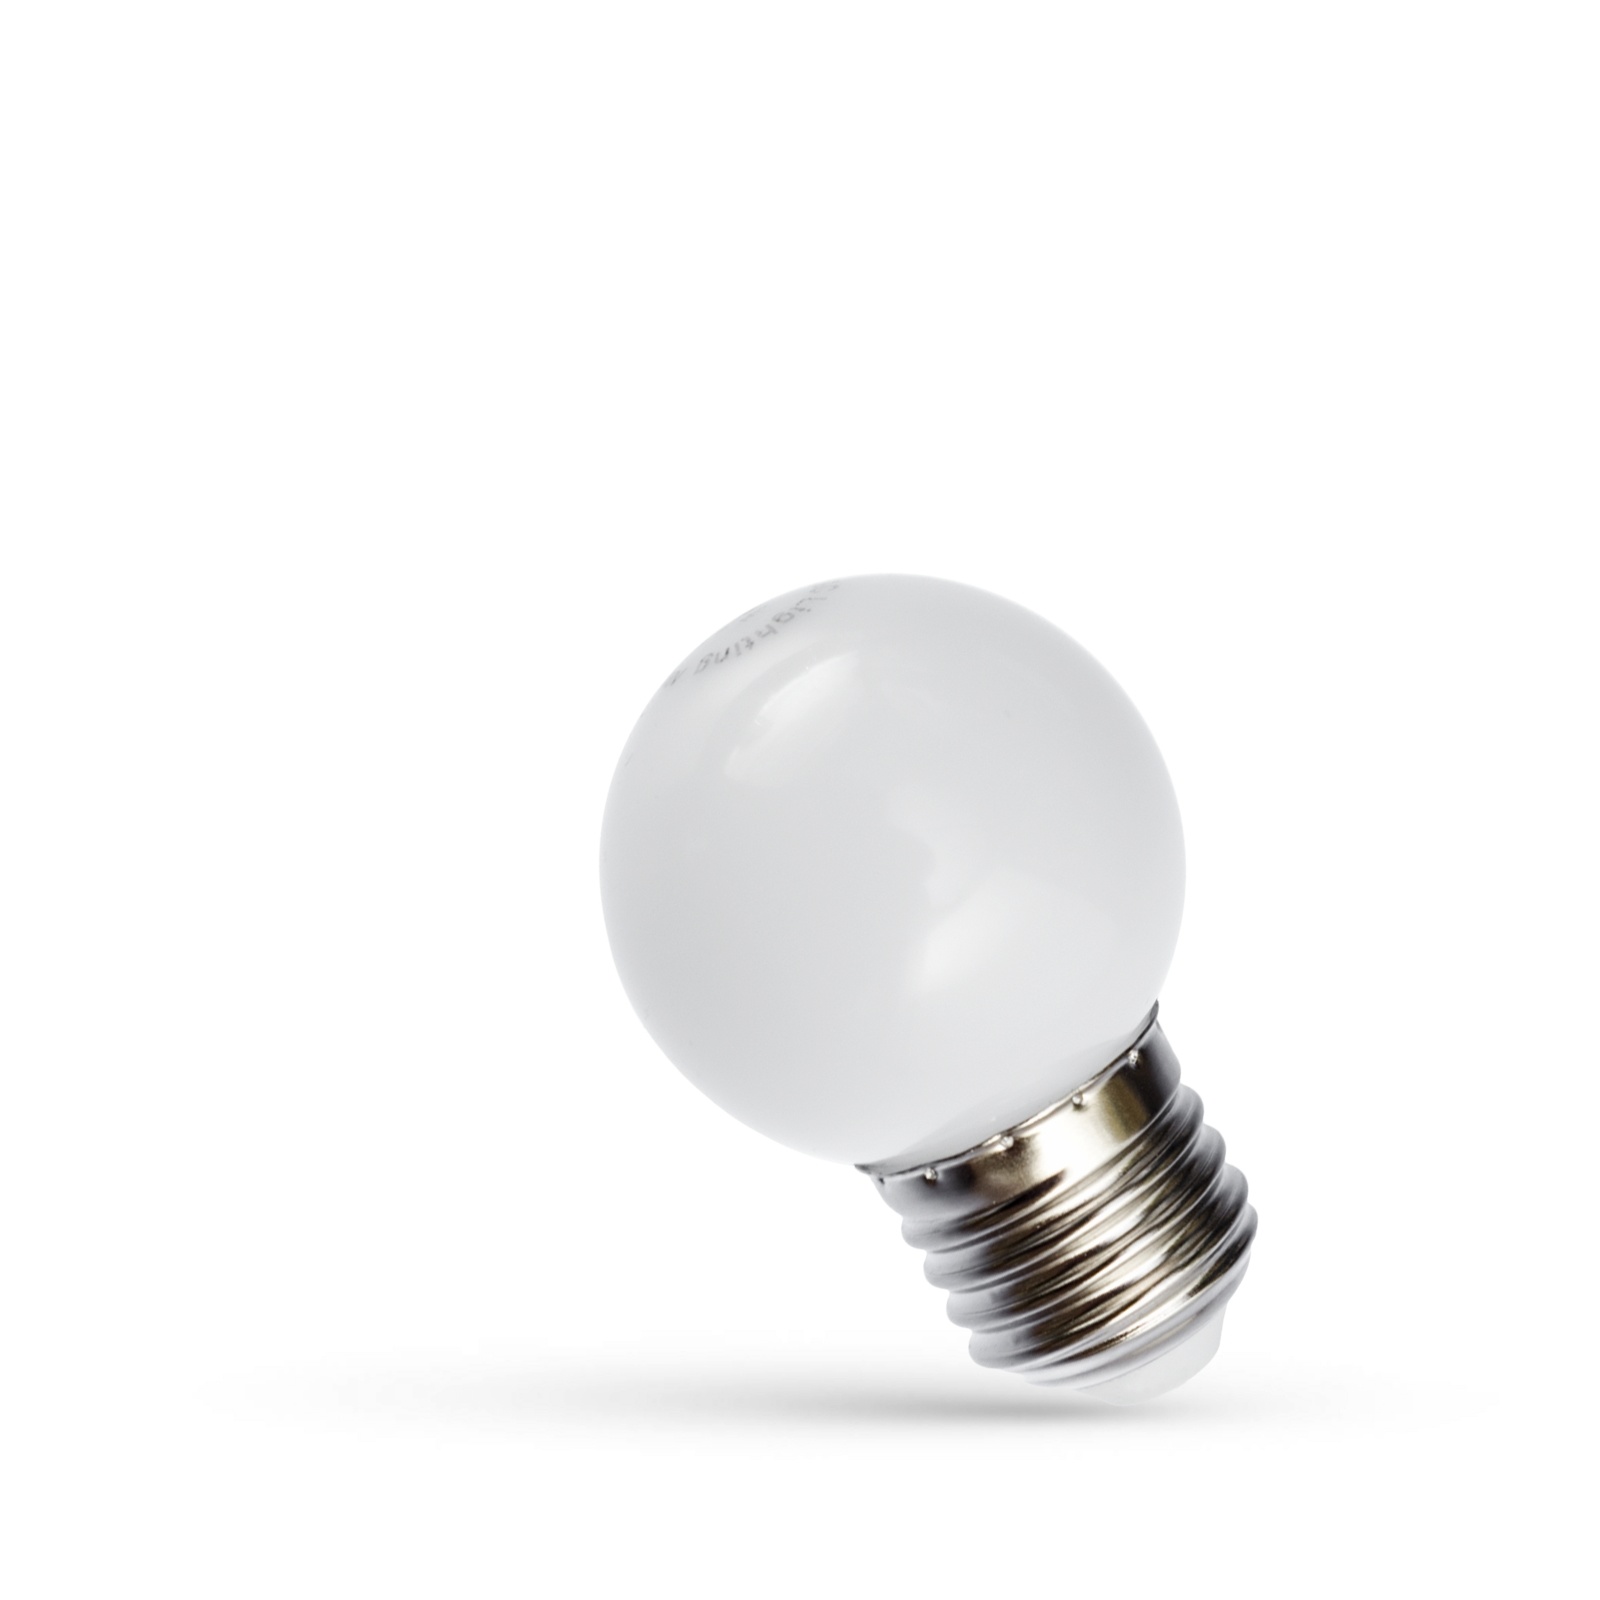 Geduld Onverenigbaar Stap LED Lamp E27 fitting - G45 - 6000K daglicht wit - 1W vervangt 10W -  Ledpanelendiscounter.nl